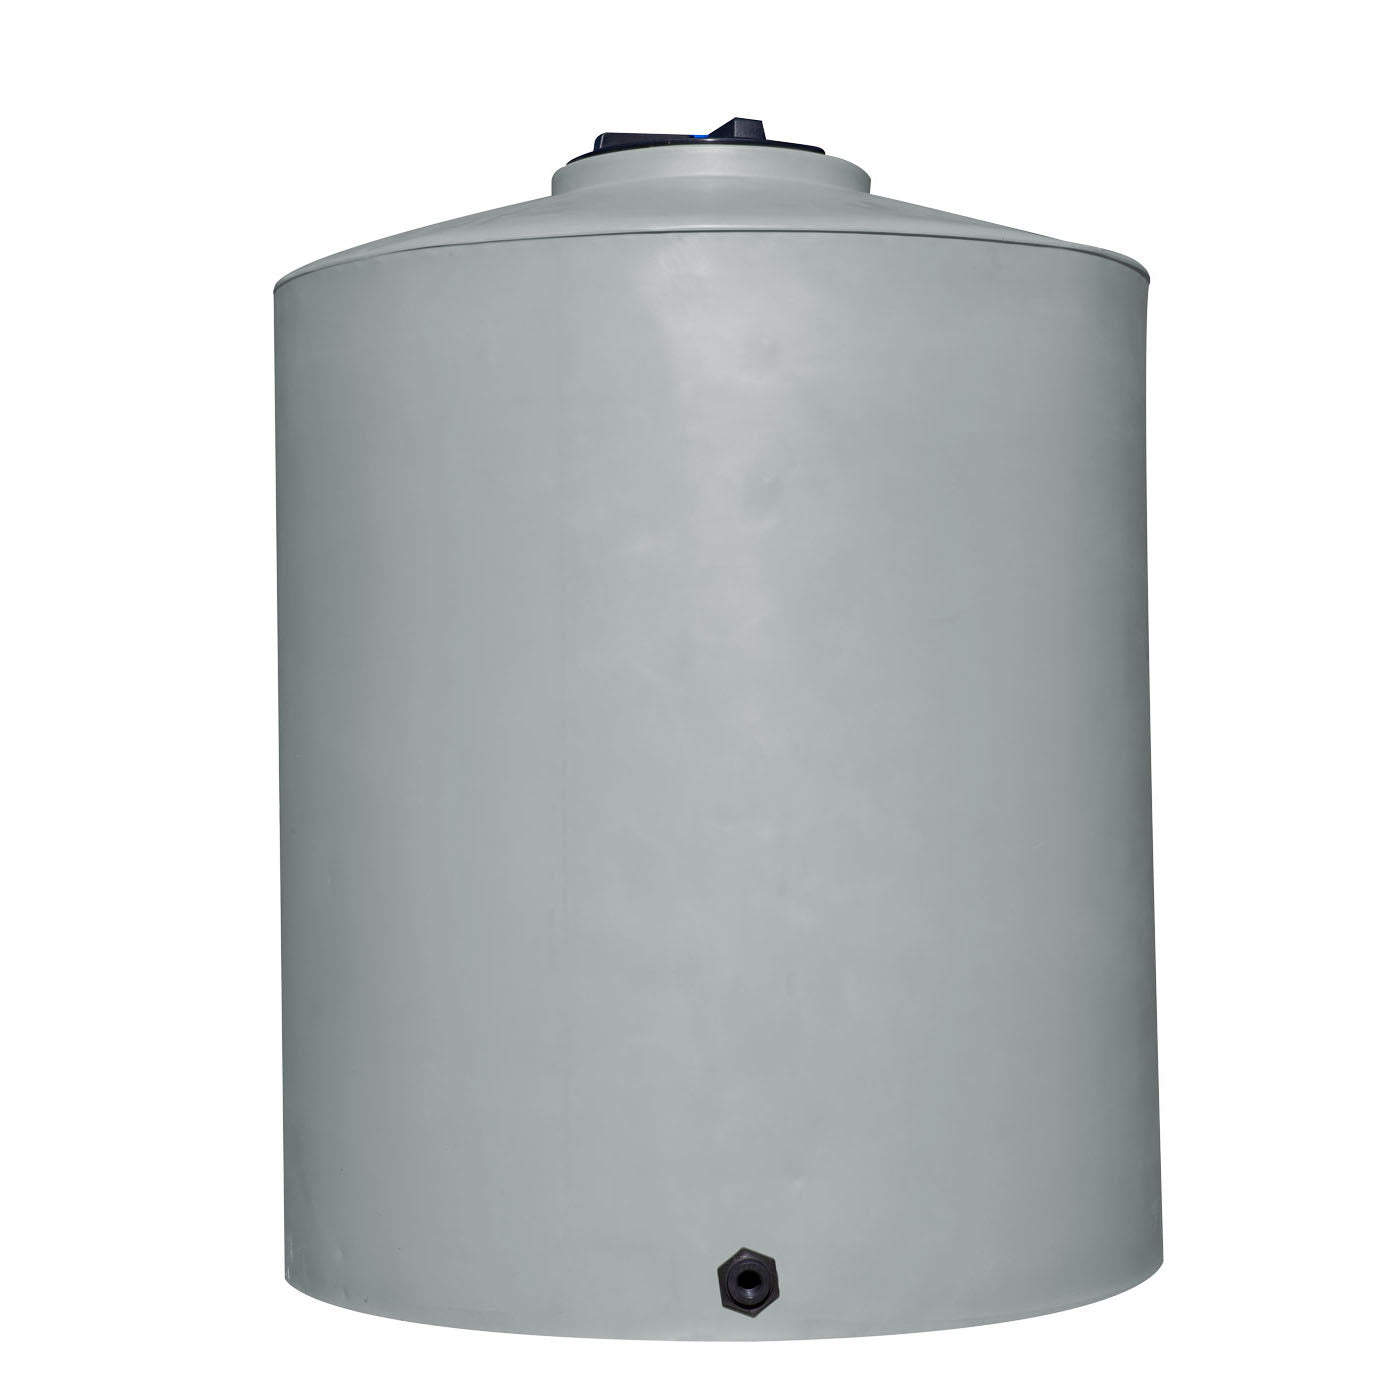 Bailey 2,100L light grey water tank